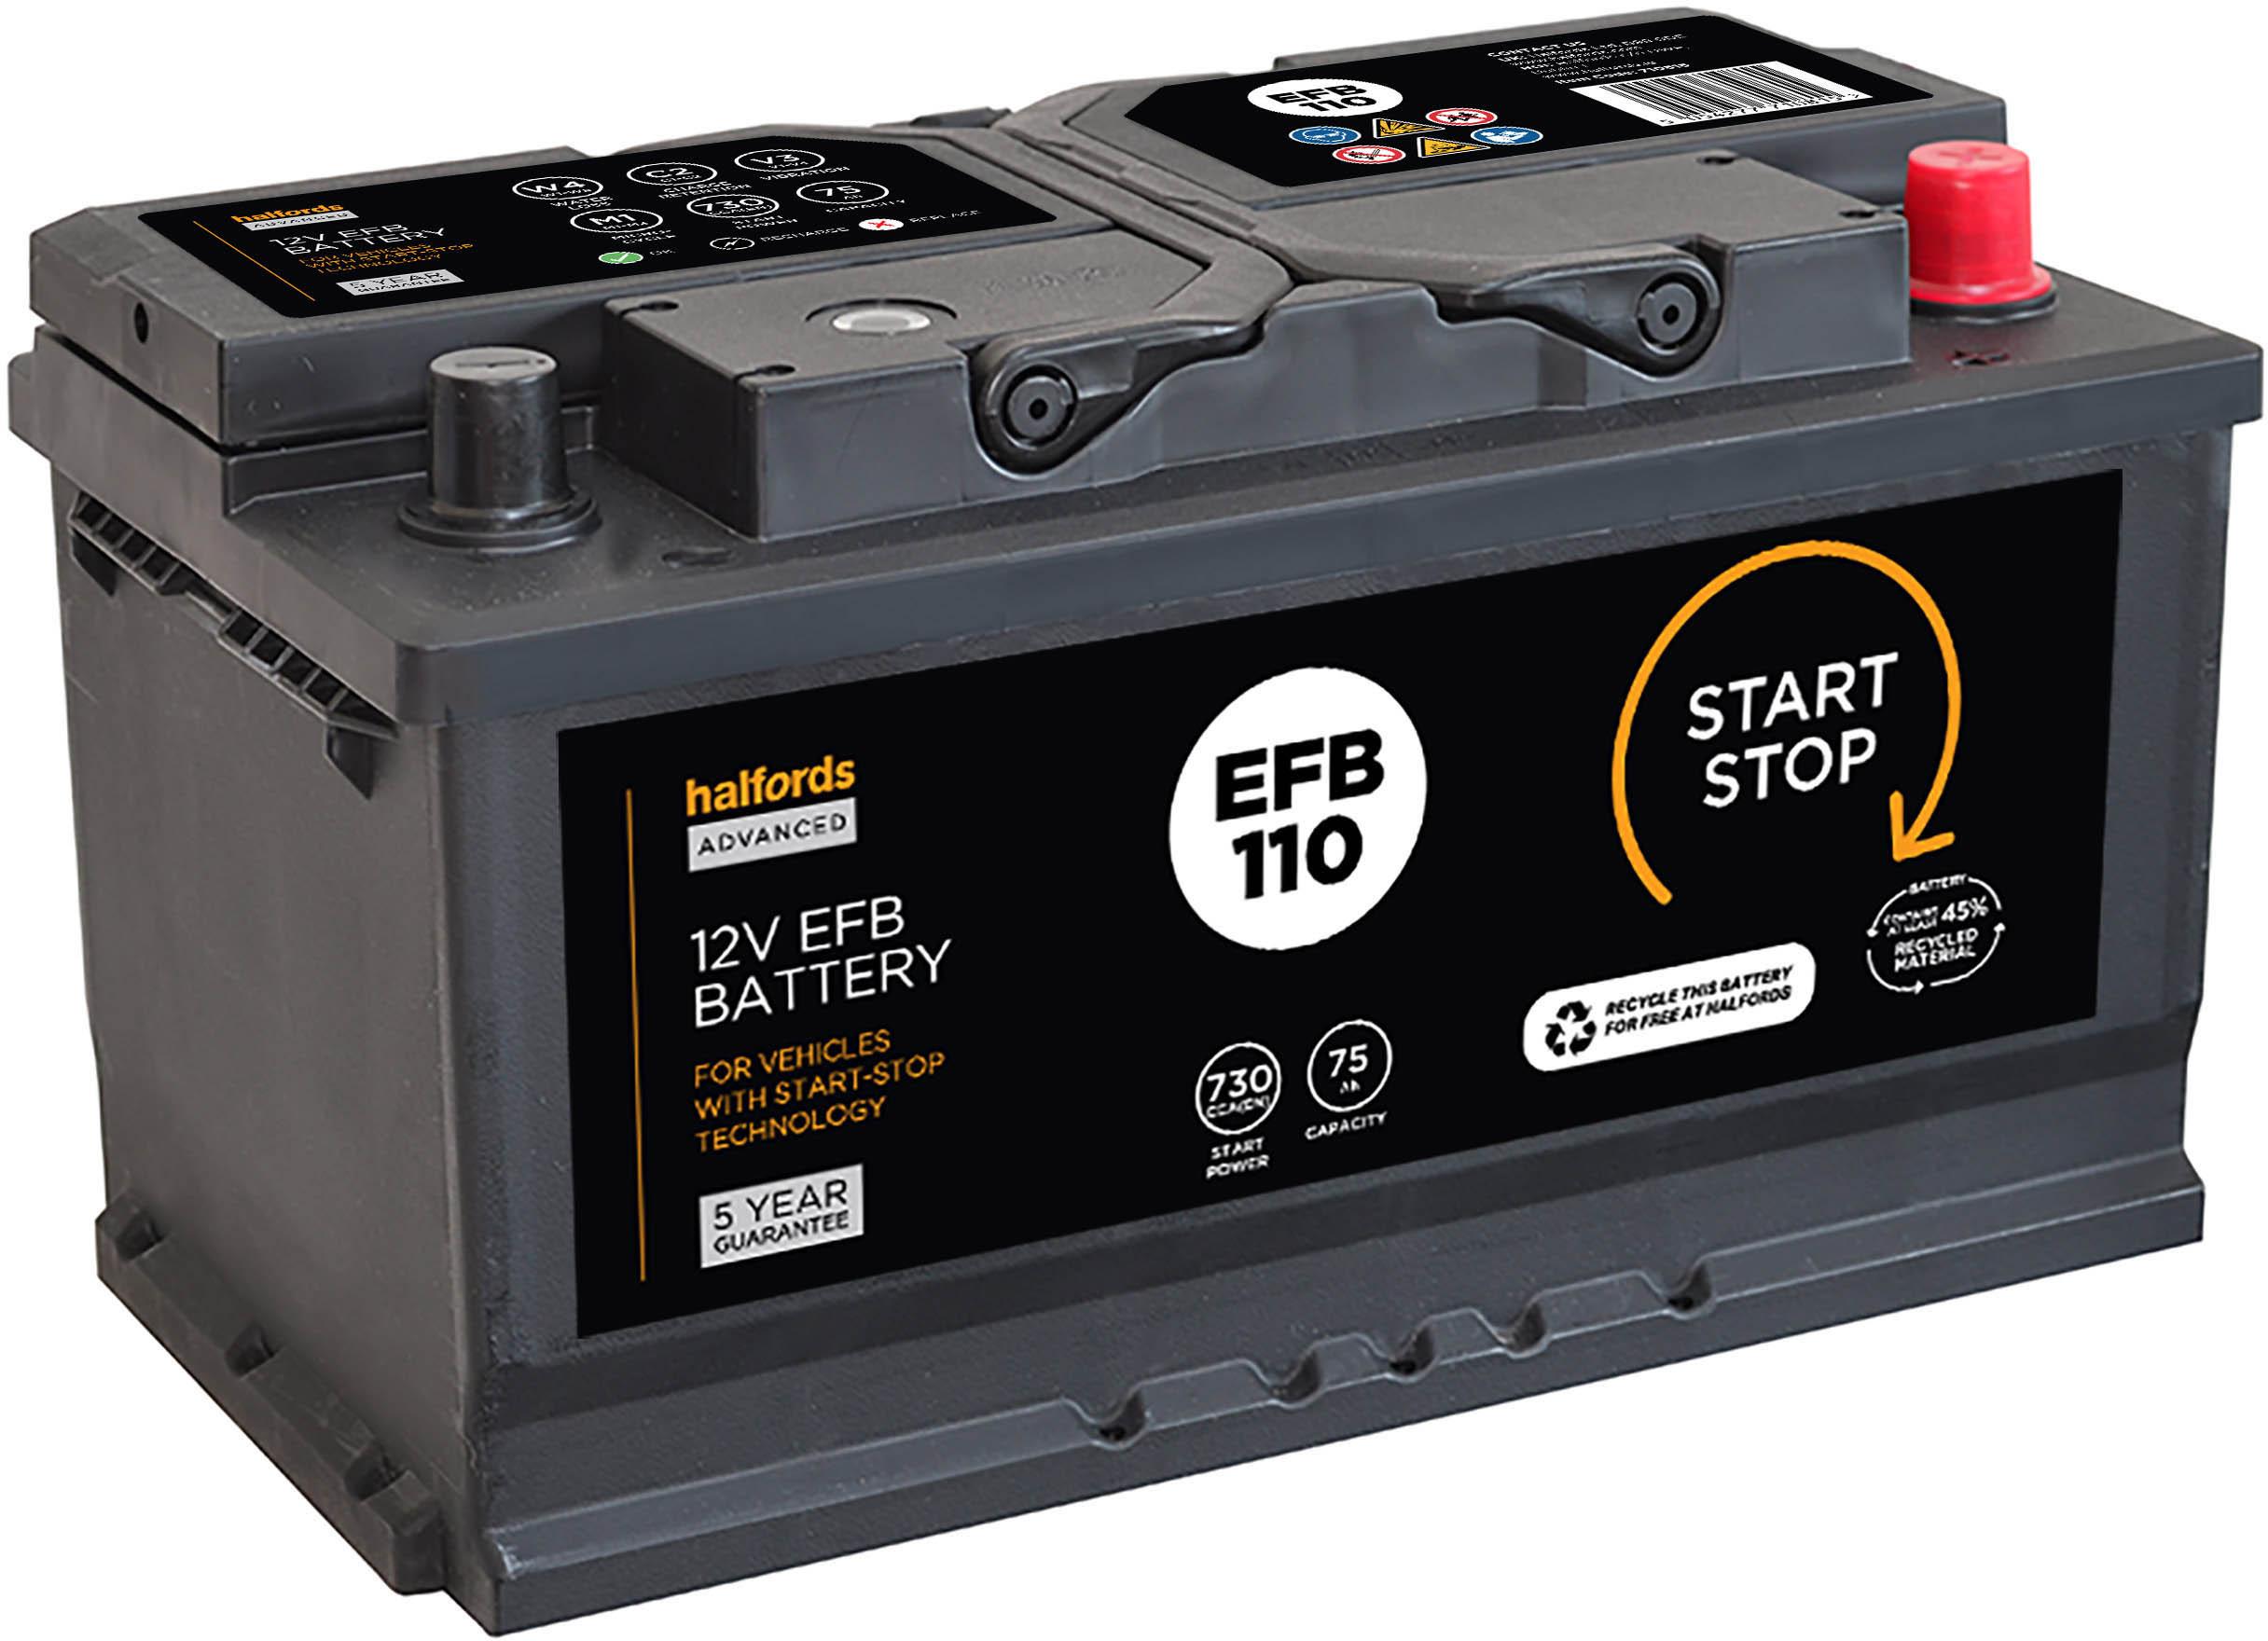 Halfords Efb110 Start/Stop Efb 12V Car Battery 5 Year Guarantee